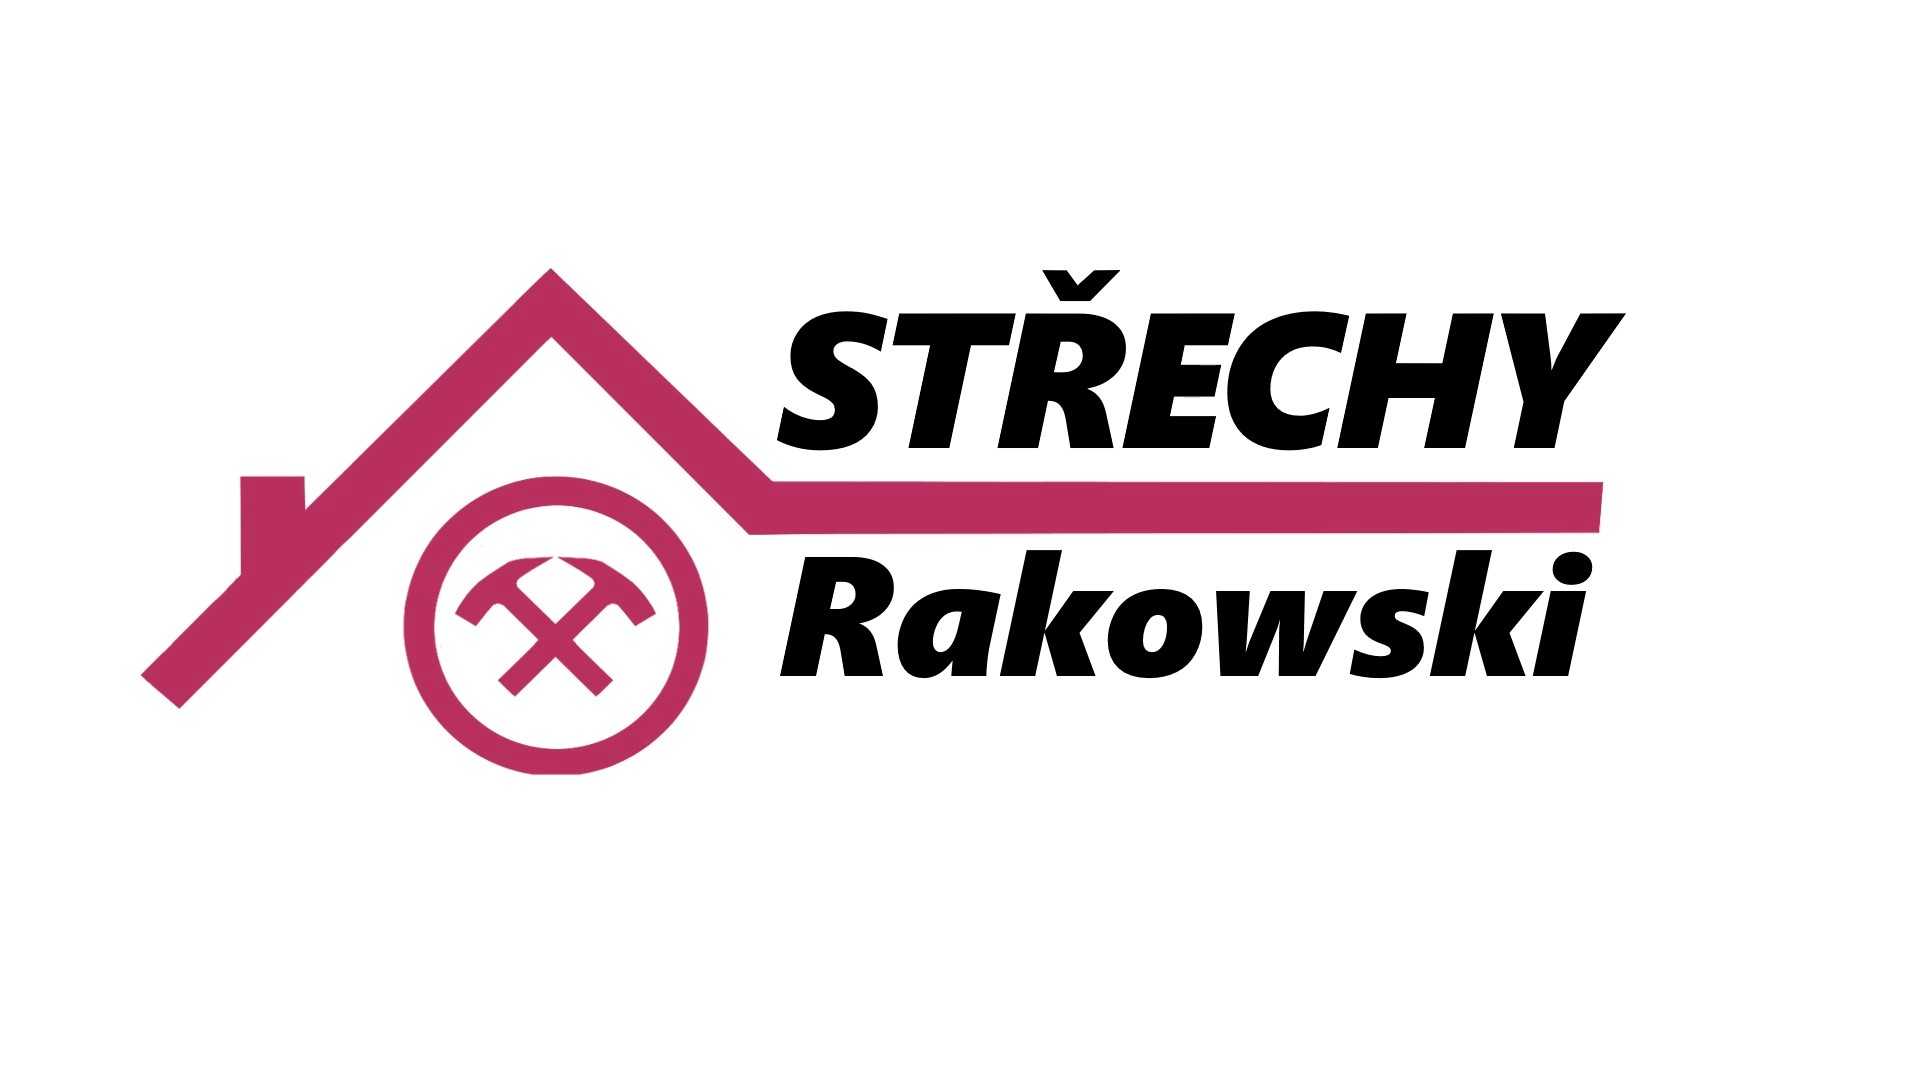 strechy rakowski logo